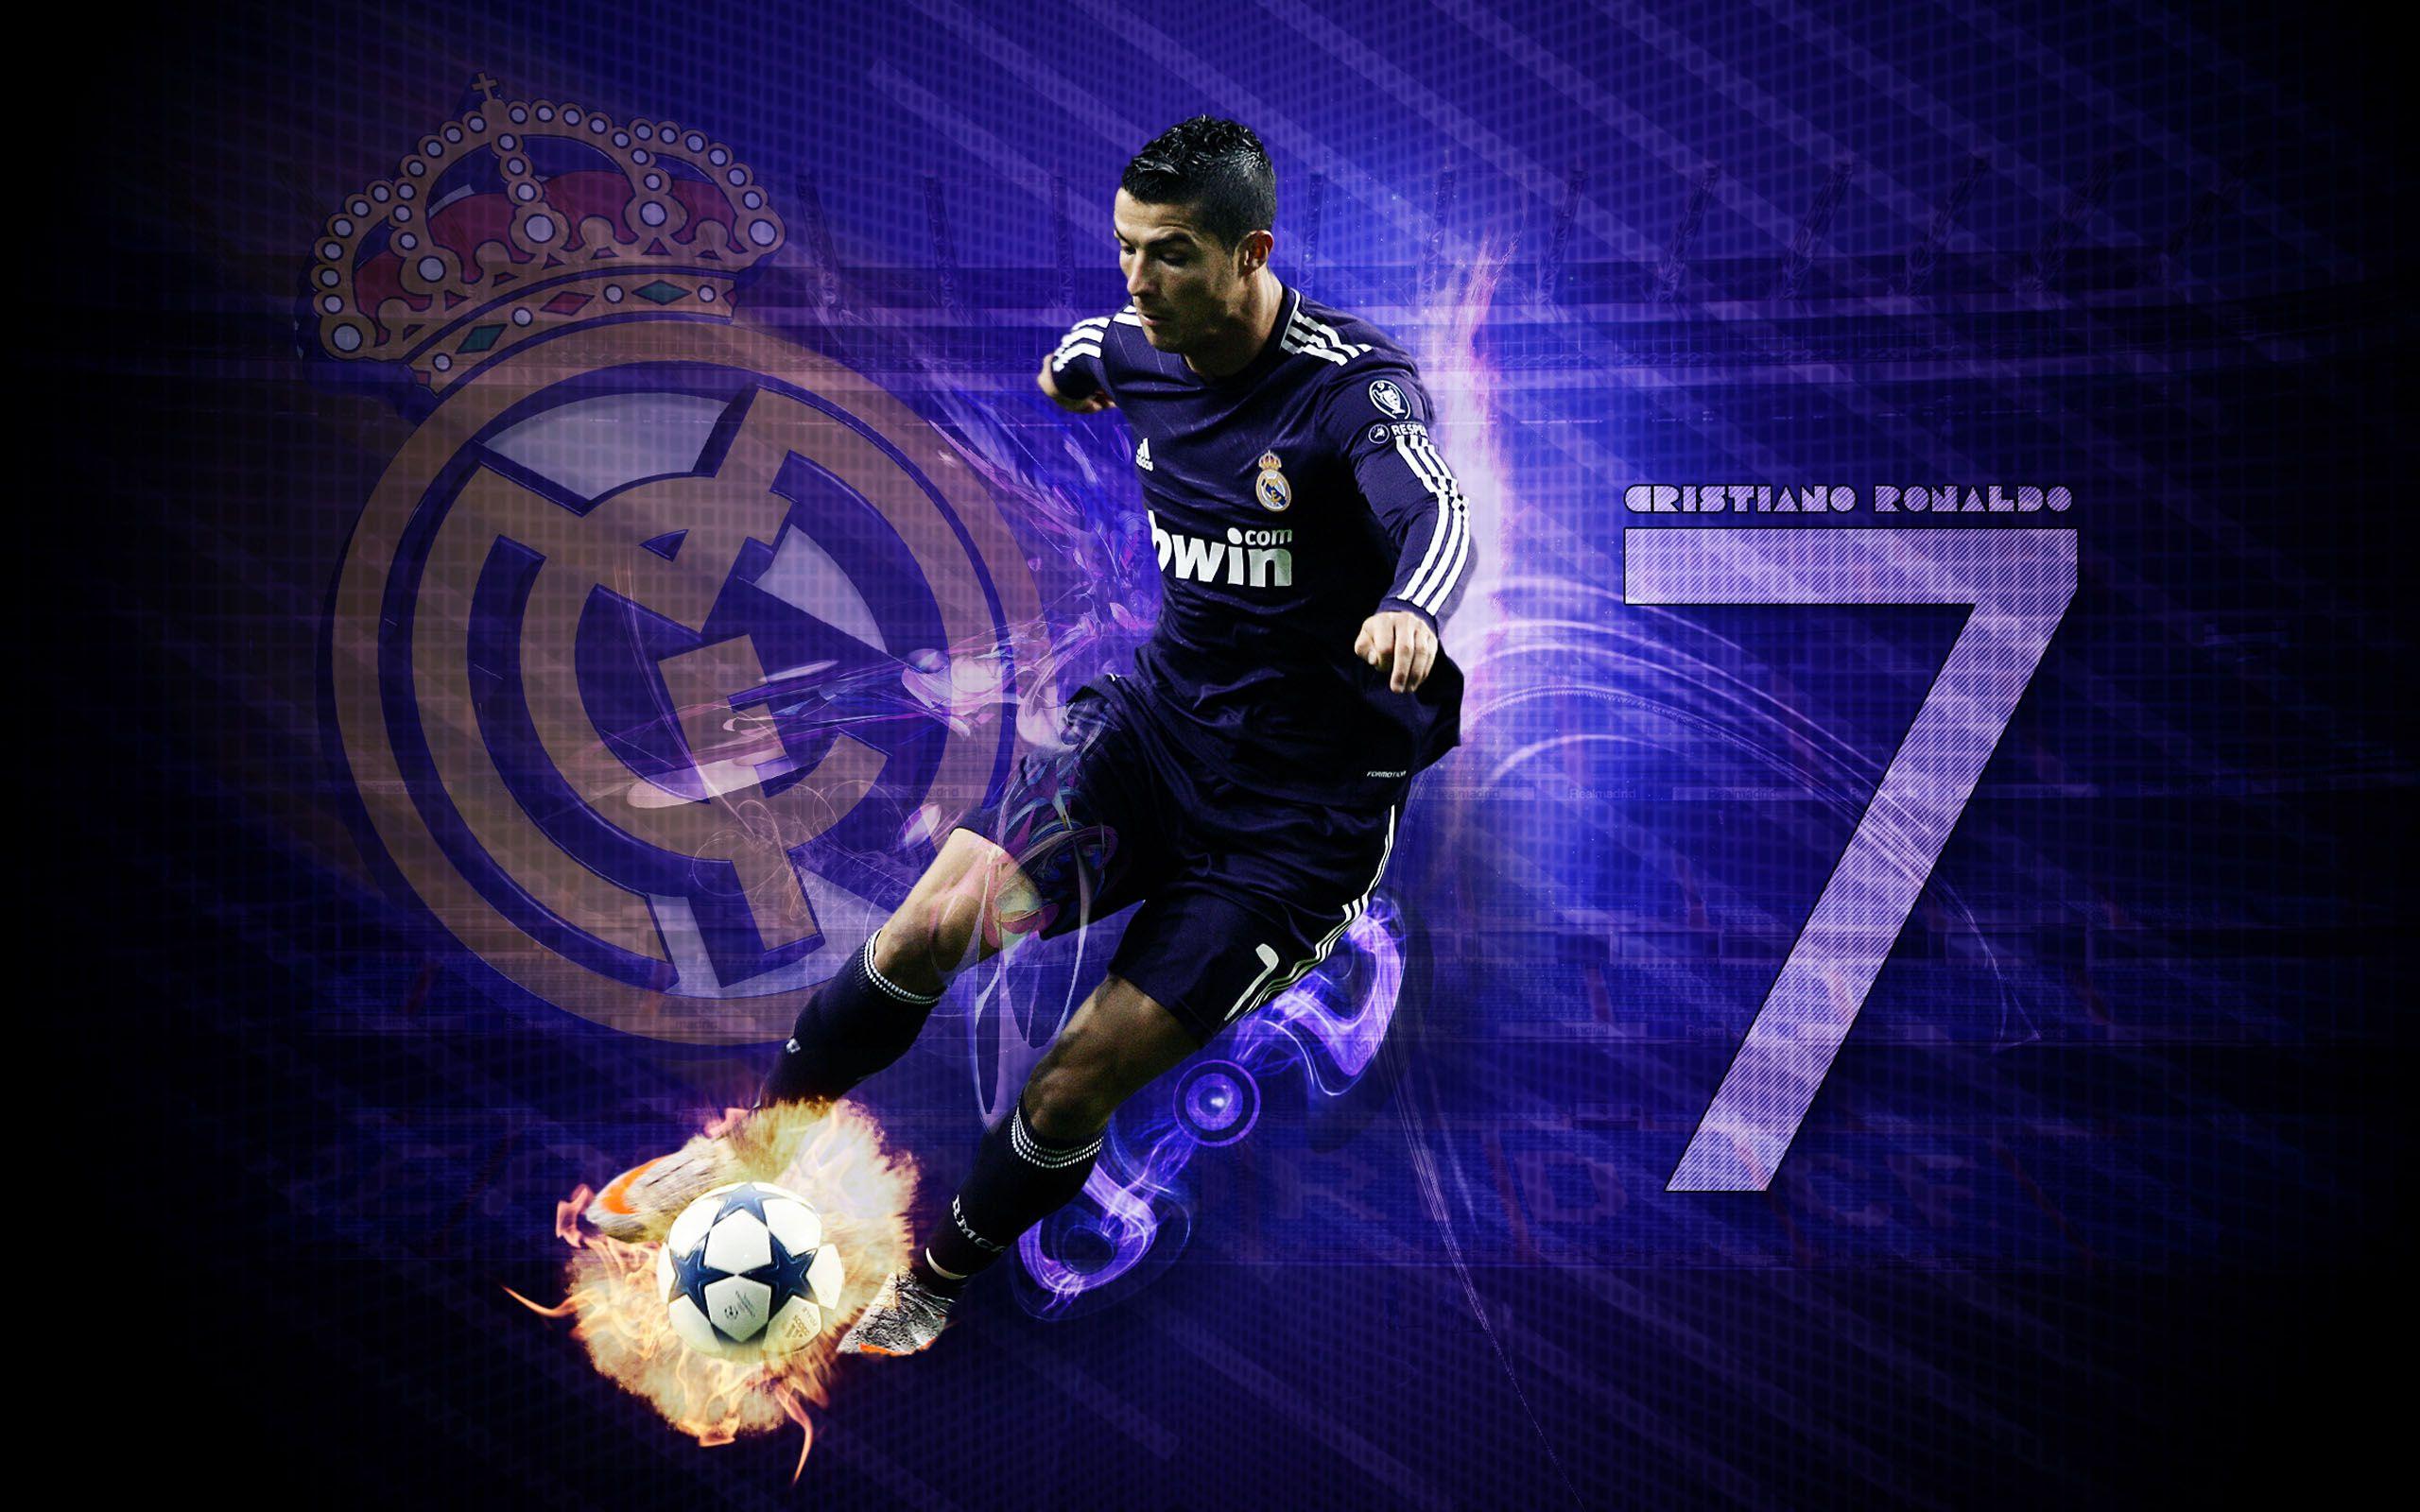 Cristiano Ronaldo Real Madrid Wallpaper Sports Image Real Madrid Hd